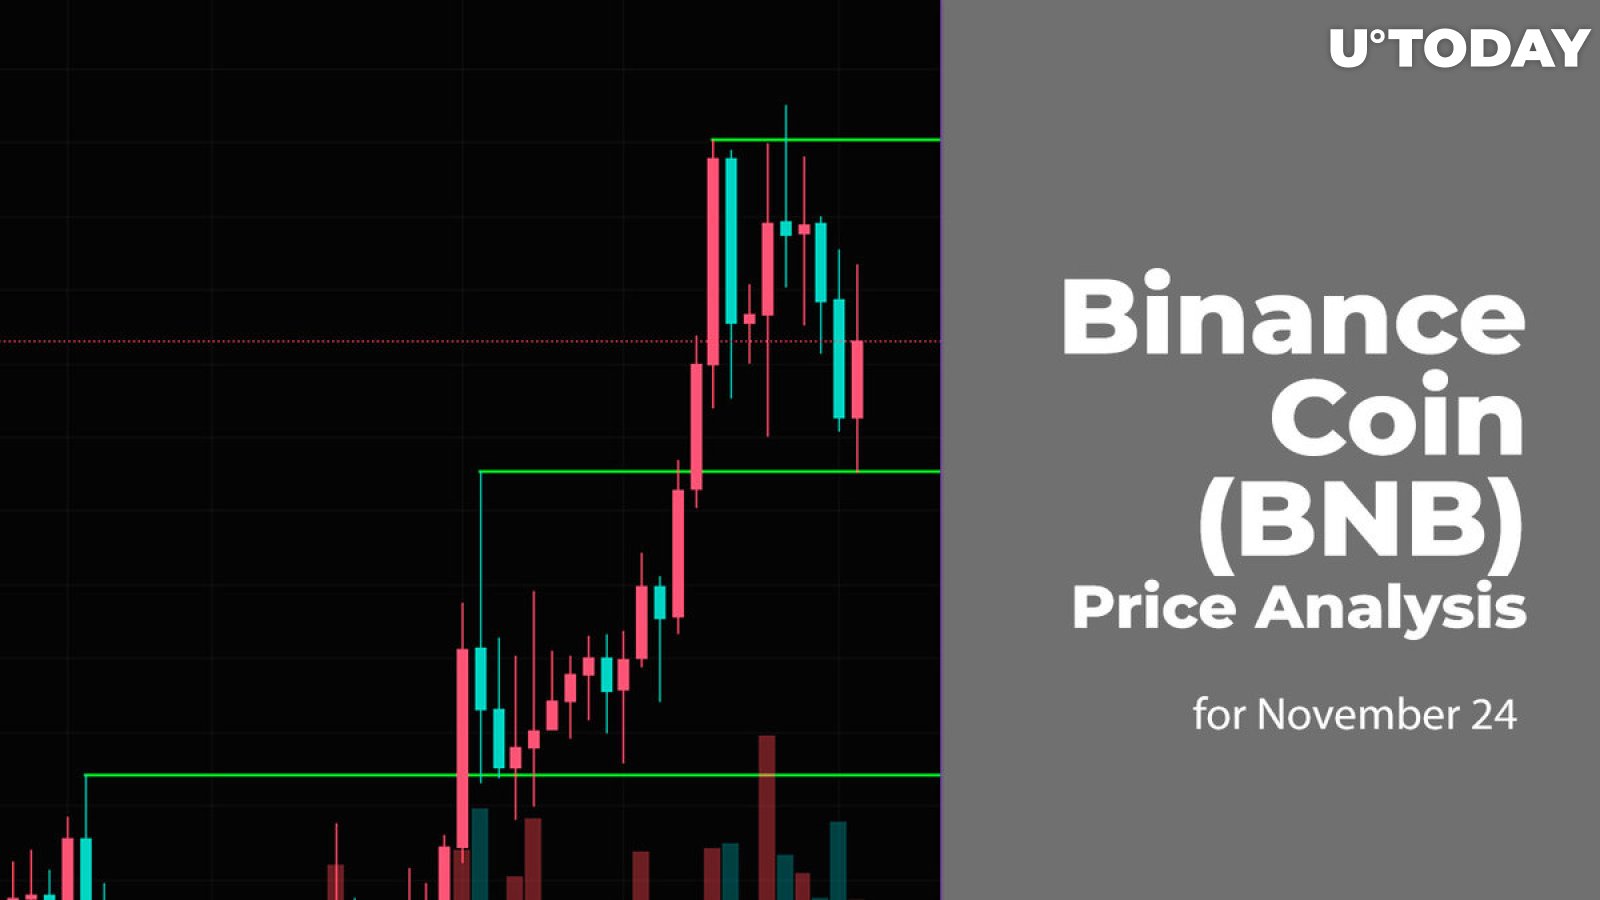 Binance Coin (BNB) Price Analysis for November 24